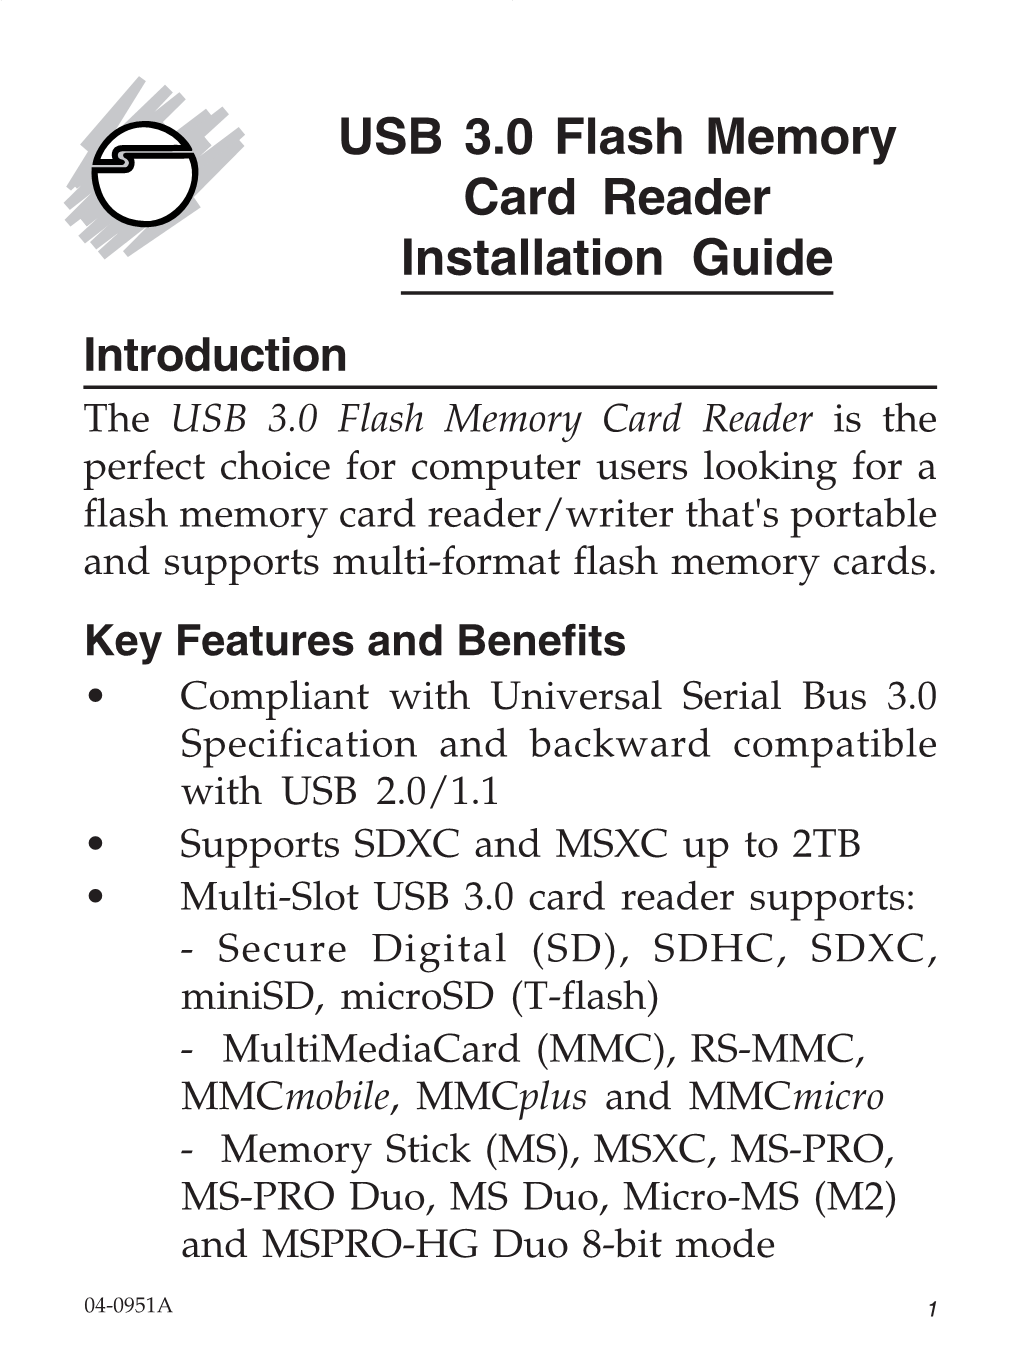 USB 3.0 Flash Memory Card Reader Installation Guide